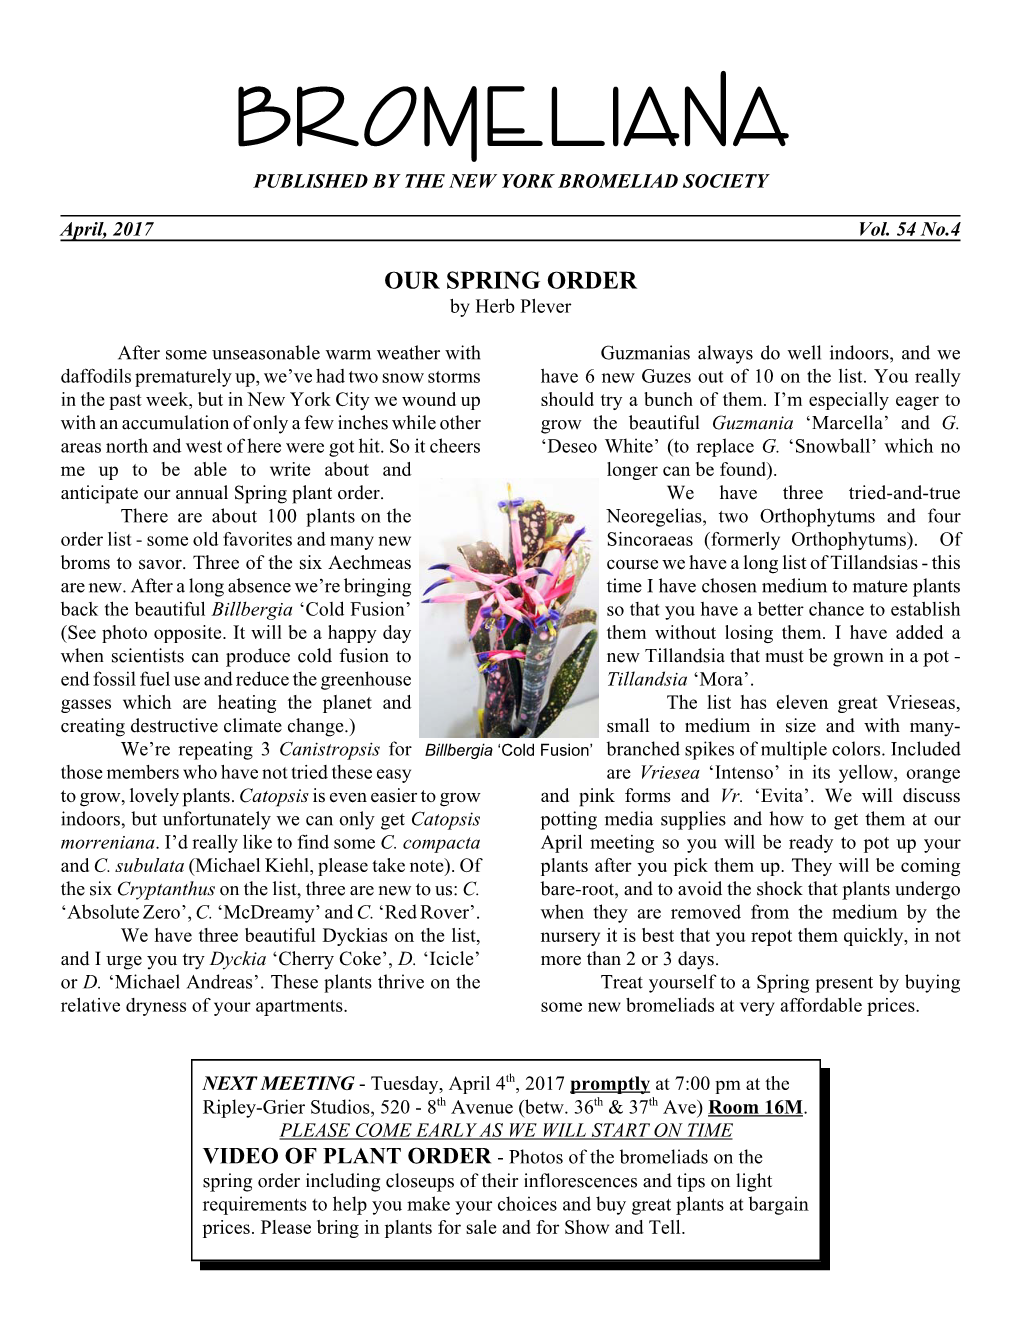 Bromeli Ana Published by the New York Bromeliad Society